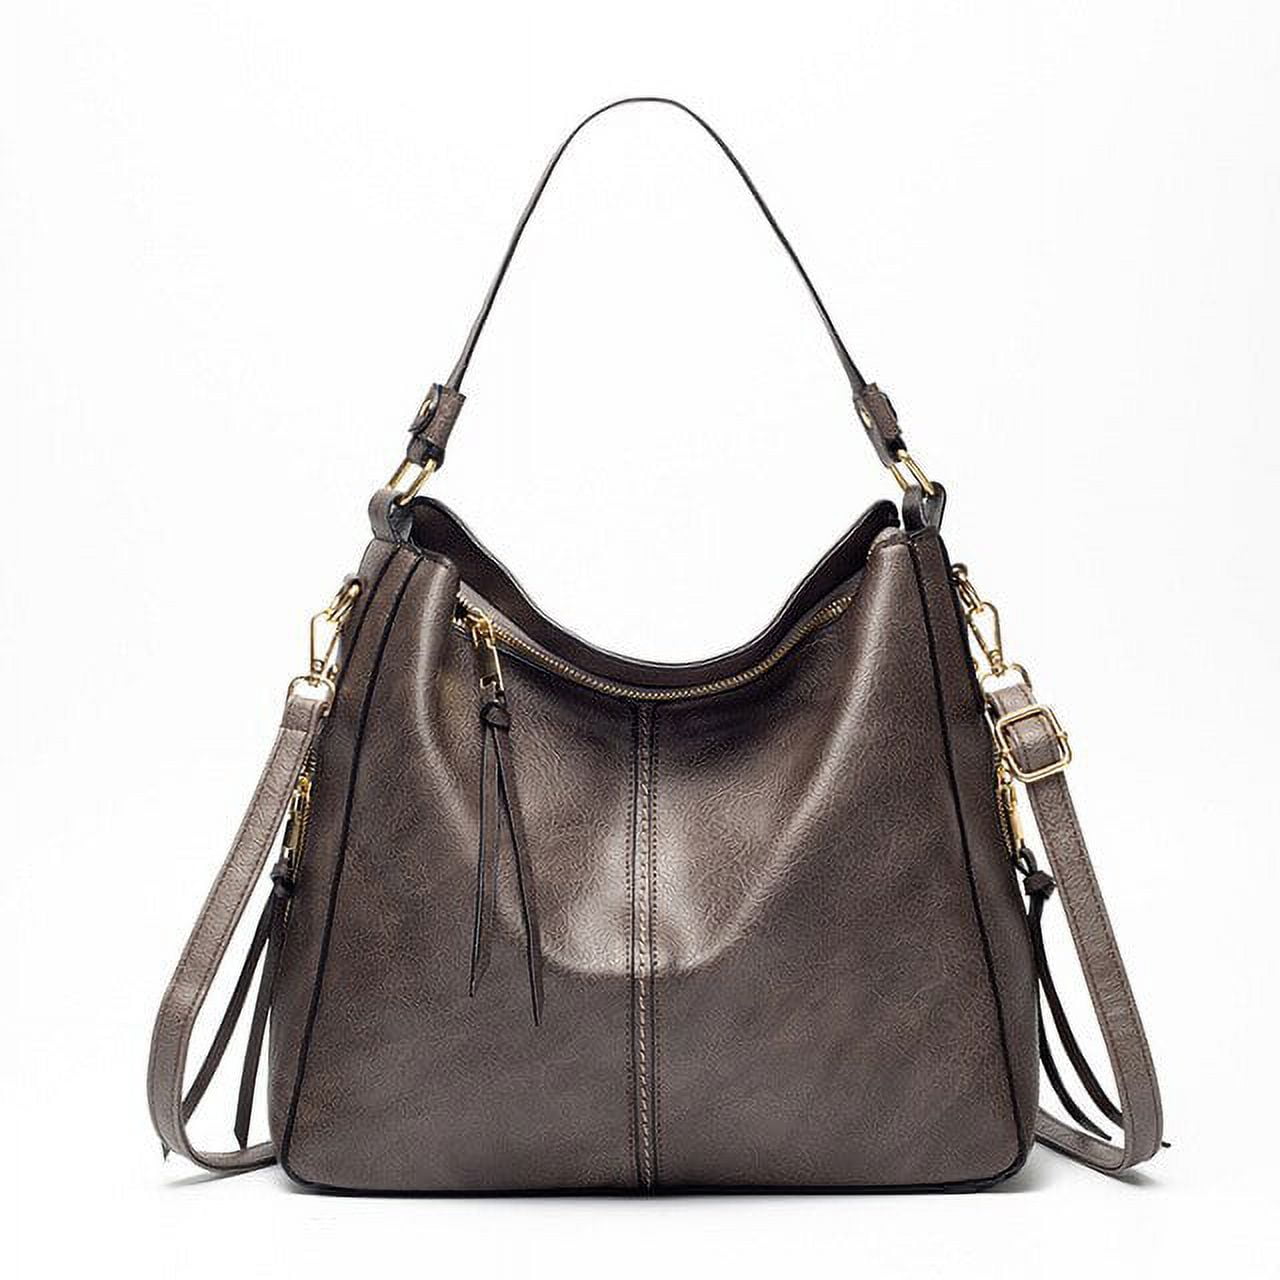 moderngenic 'Pyramid' Luxury Handbag, Fashion Cross-body Shoulder Bag, Soft  PU Leather Designer Handbag for Women/Girls (Blue): Handbags